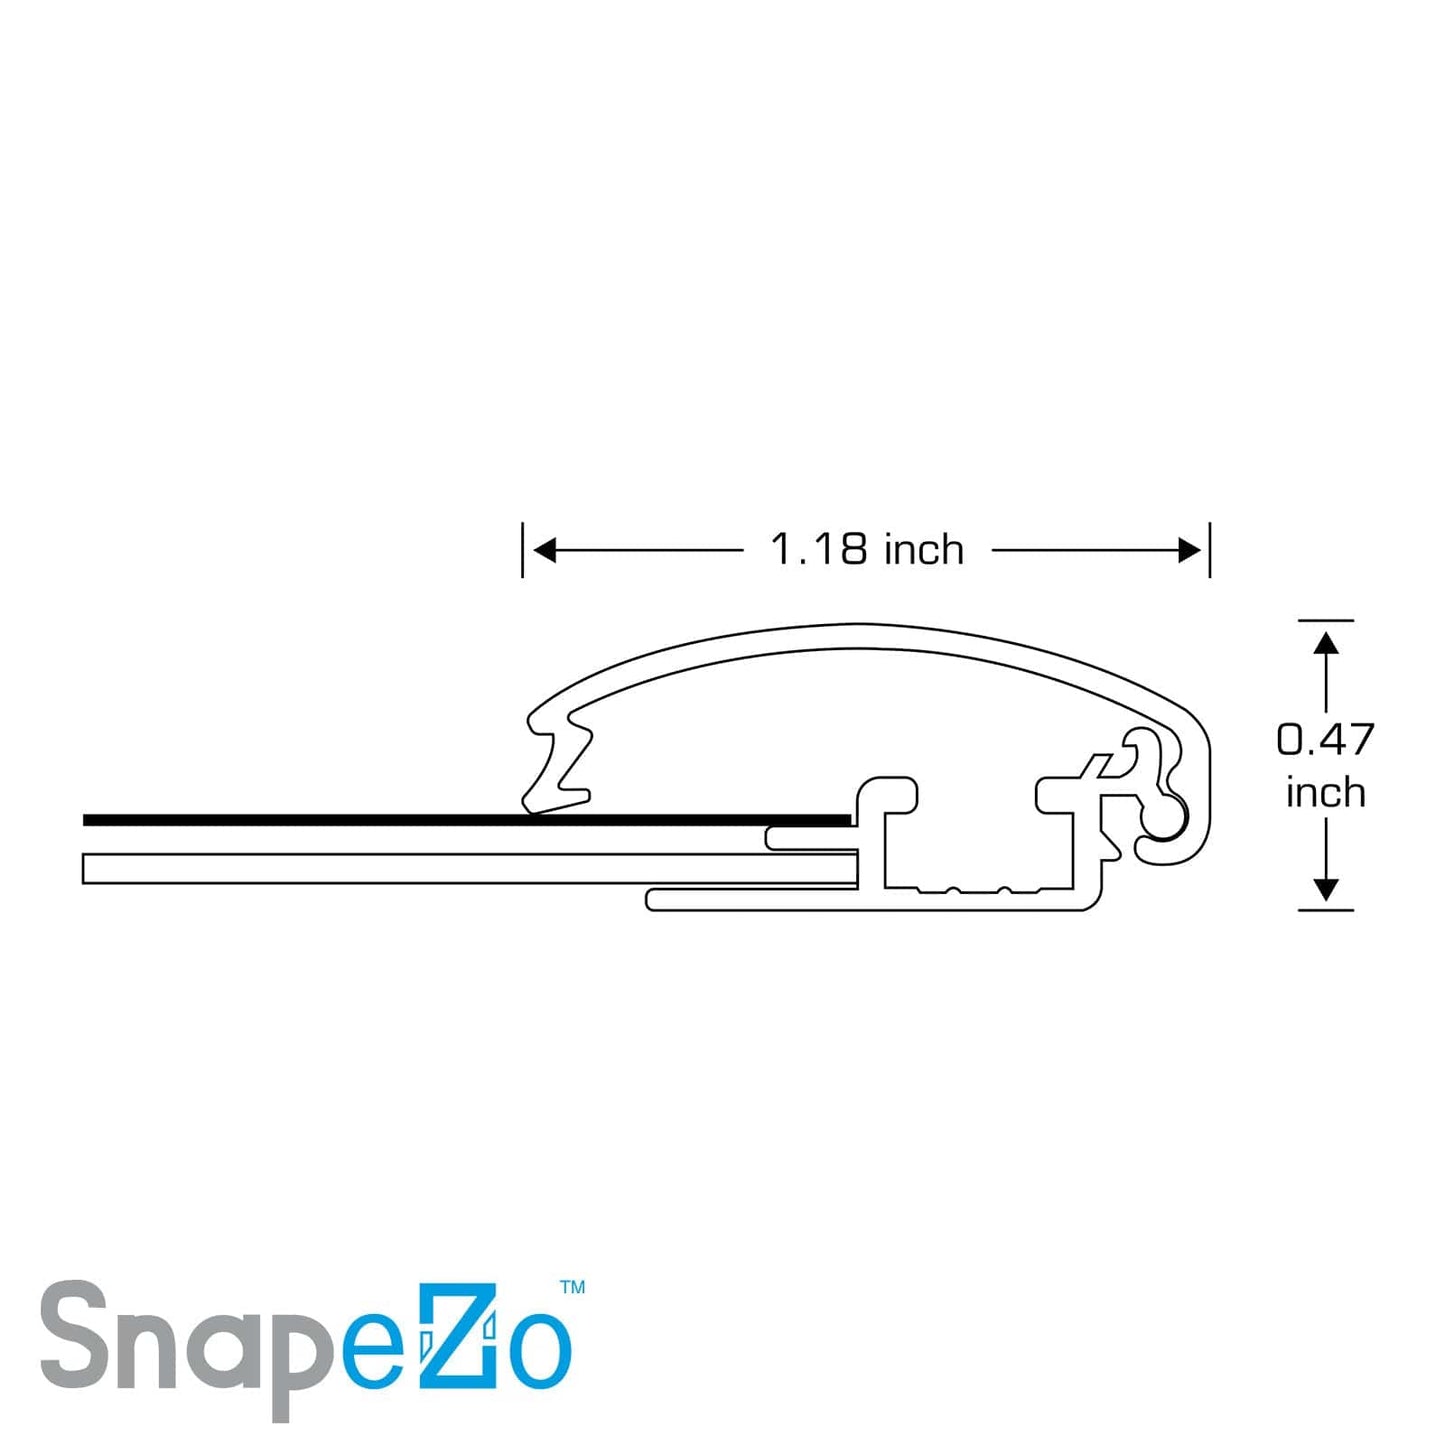 21x28 White SnapeZo® Snap Frame - 1.2" Profile - Snap Frames Direct